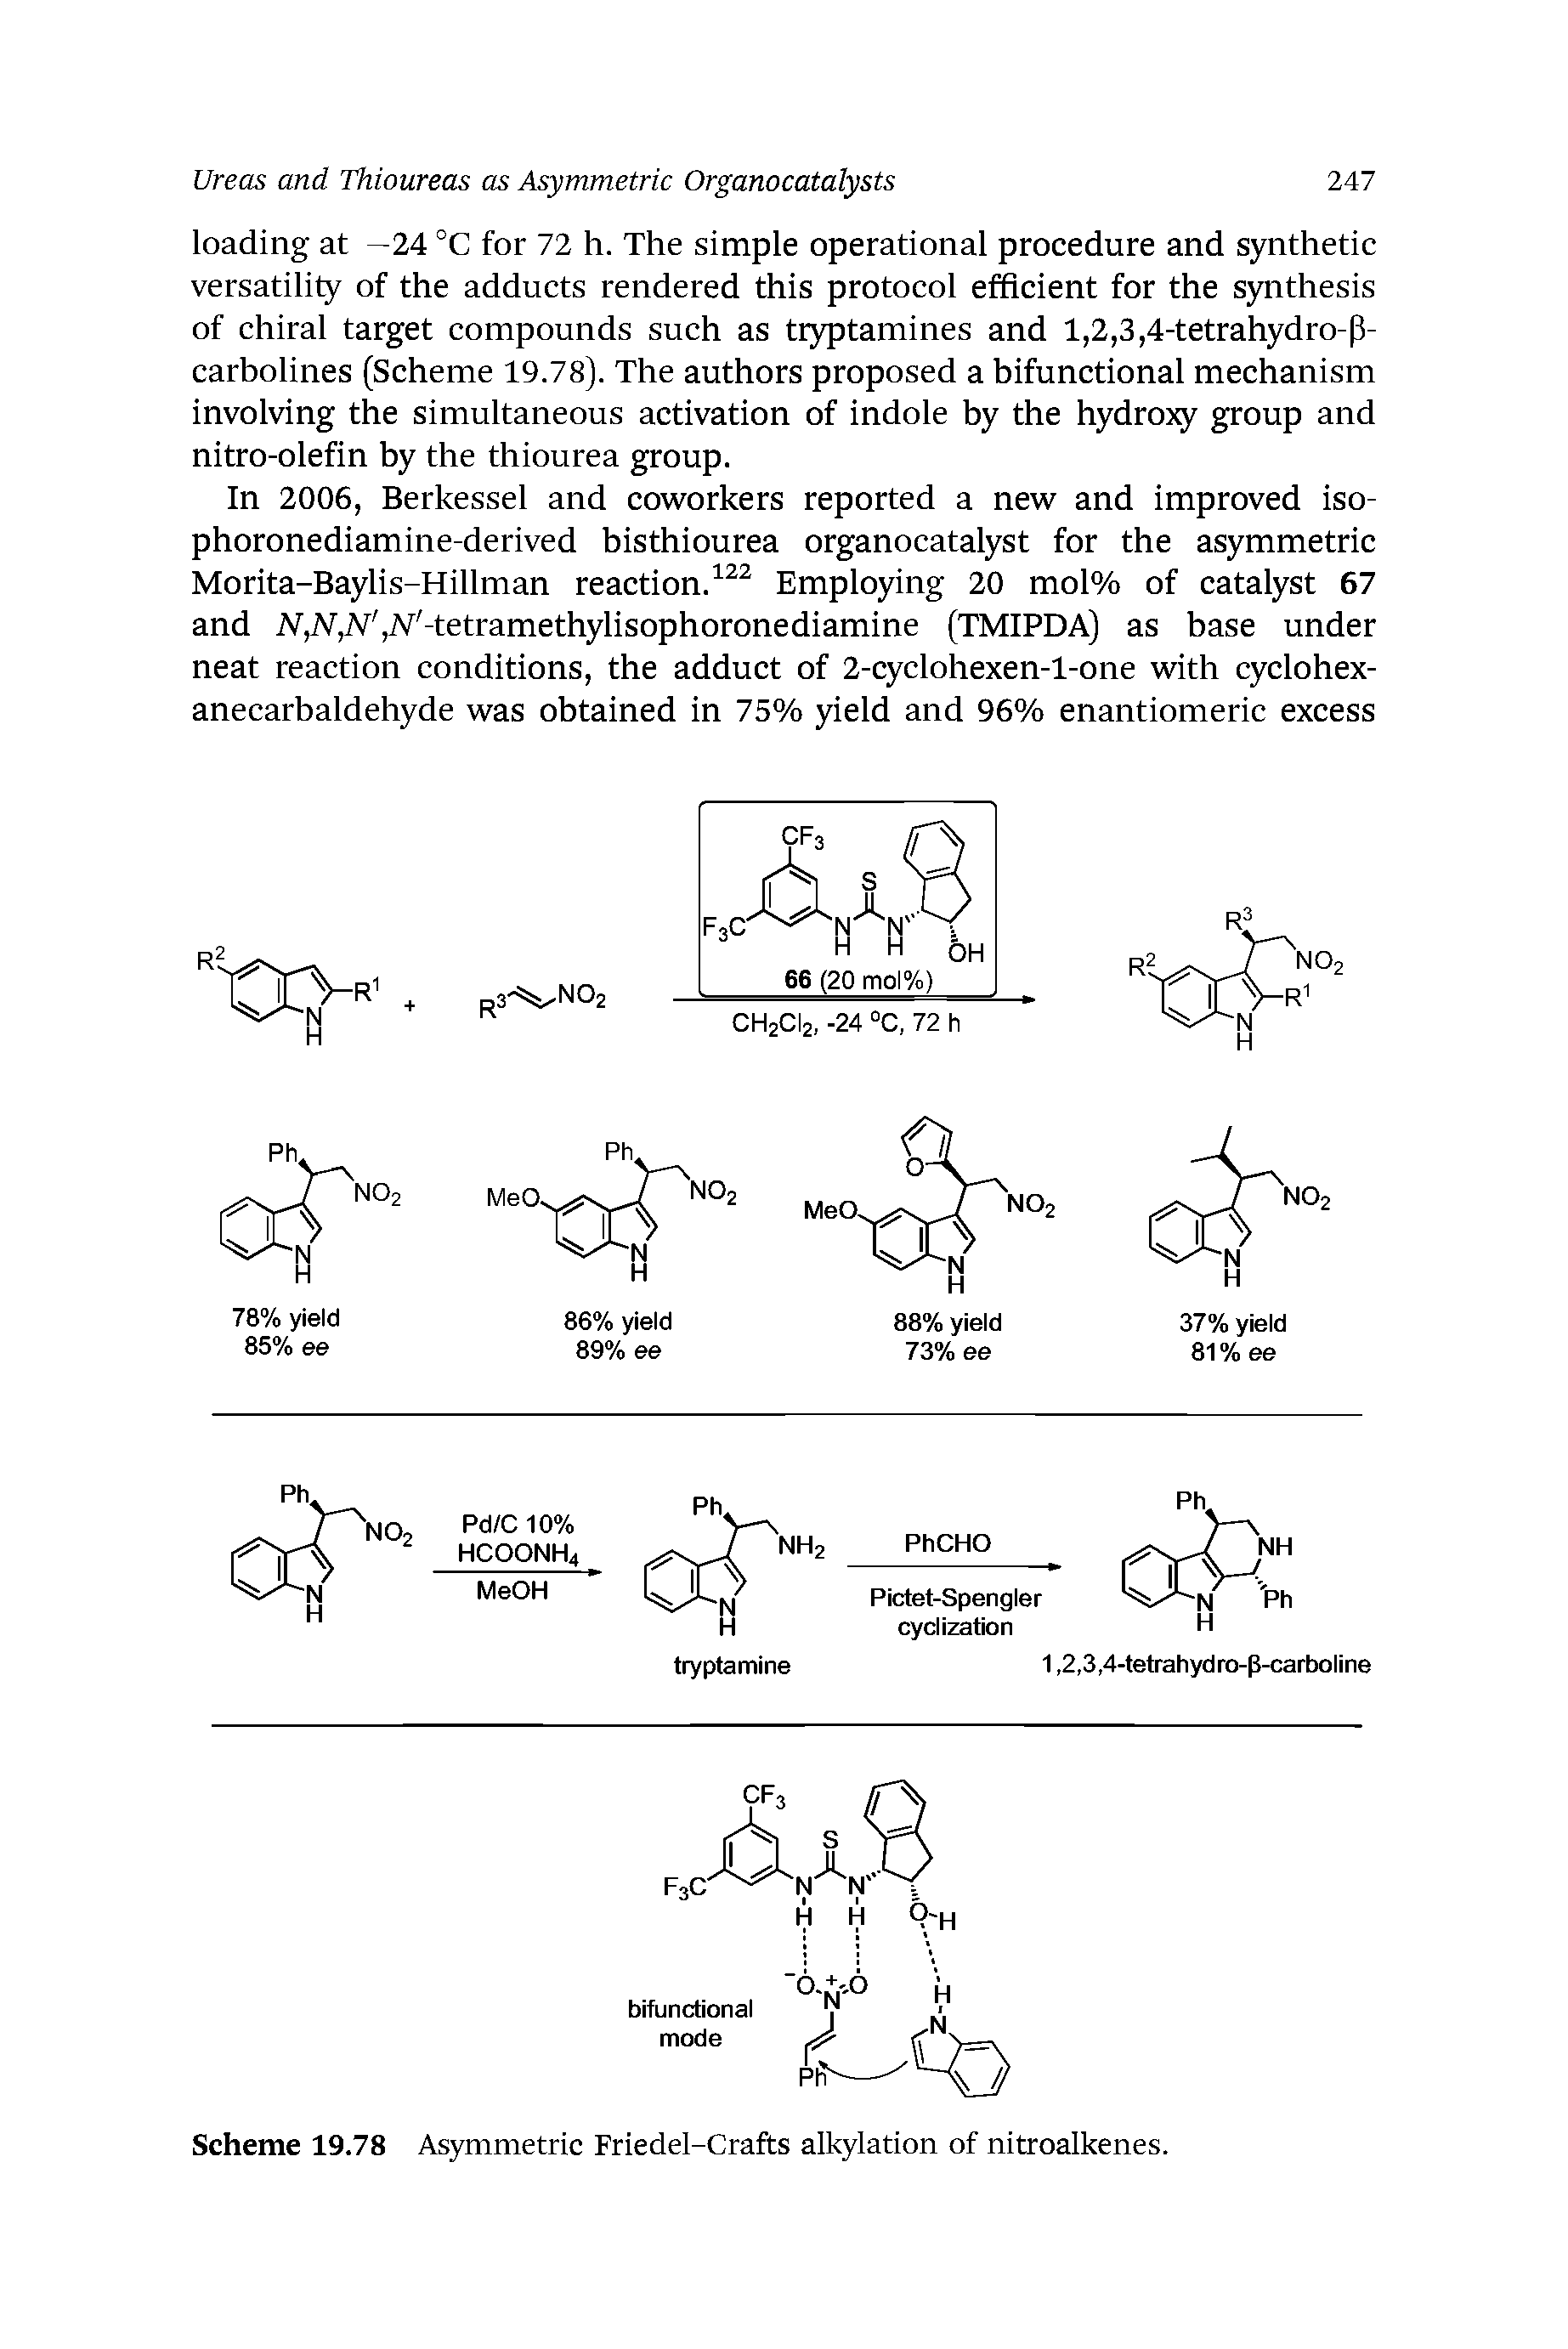 Scheme 19.78 Asymmetric Friedel-Crafts alkylation of nitroalkenes.